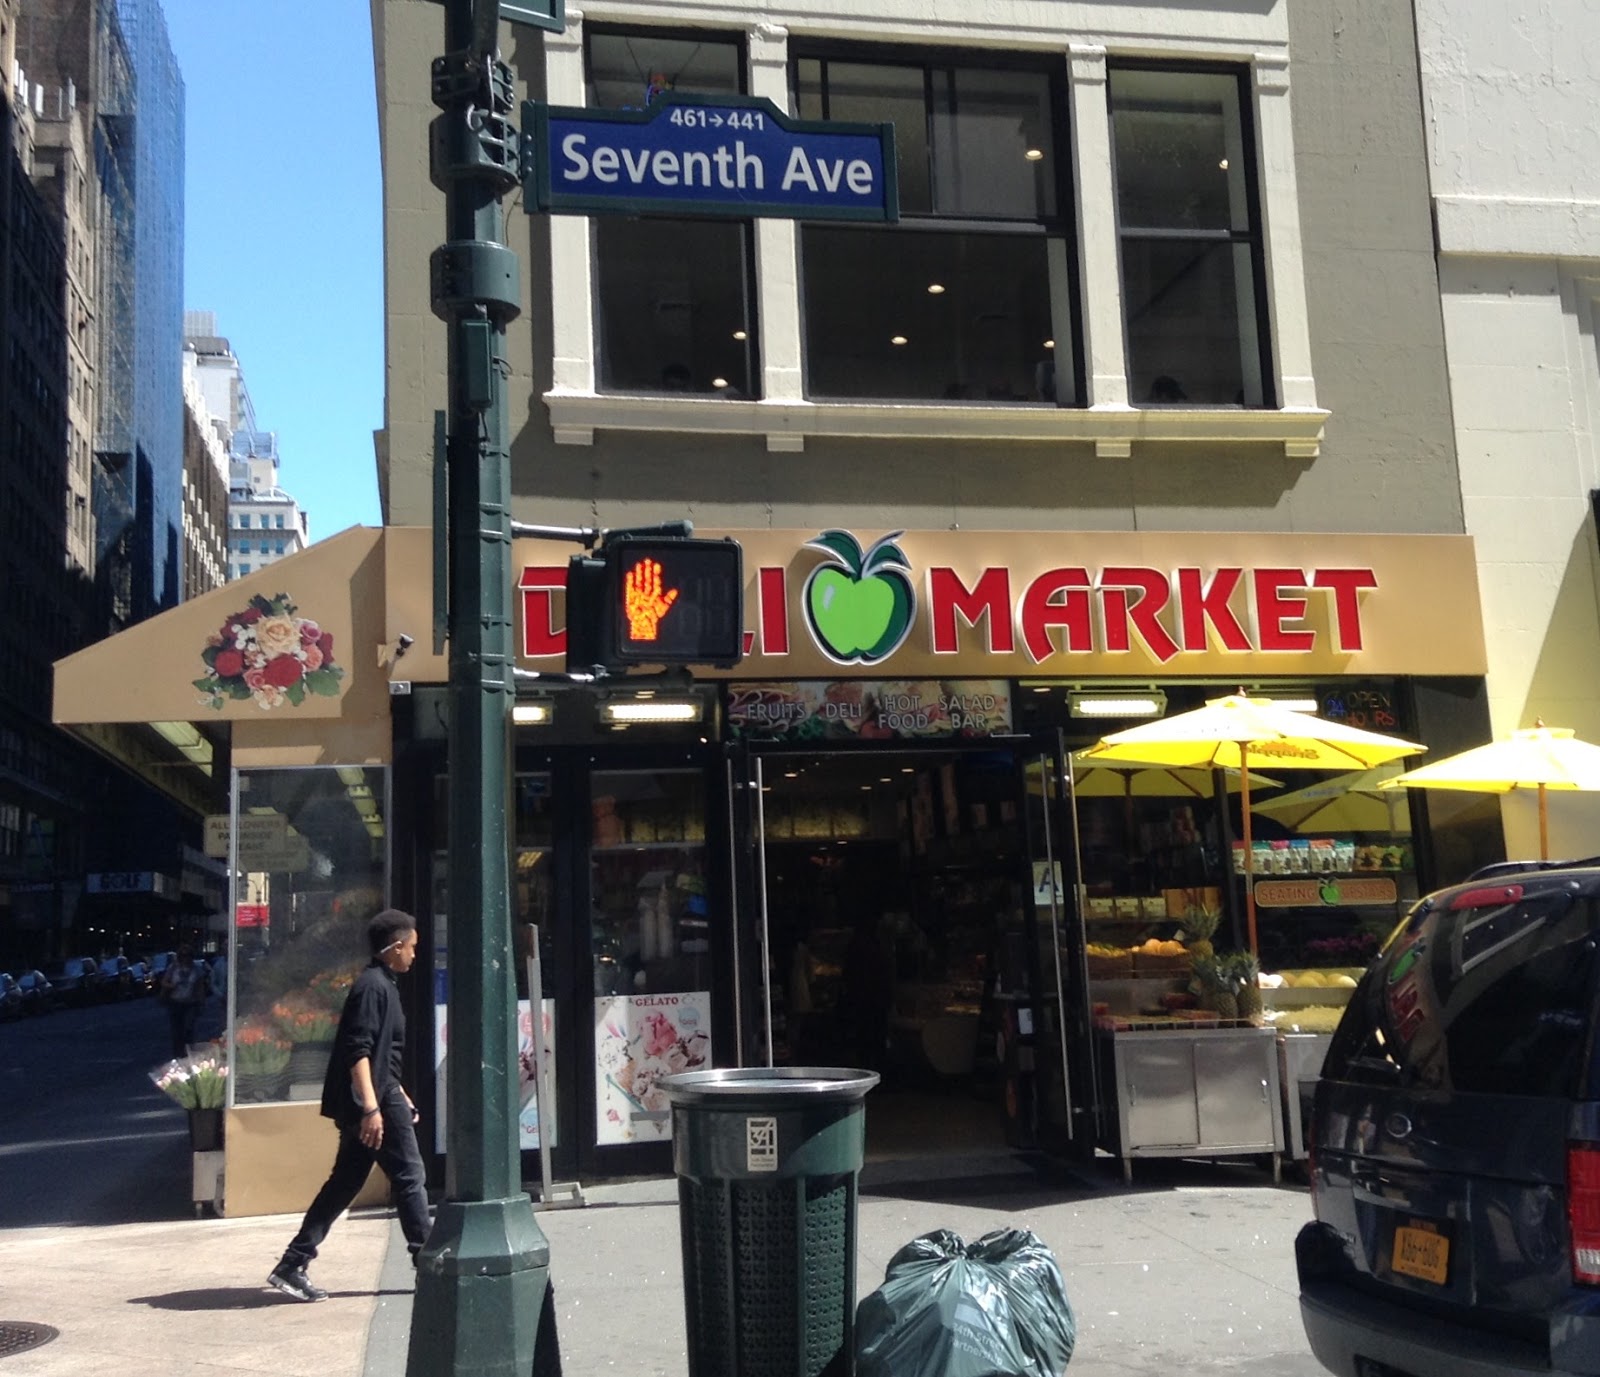 Photo of Deli, Sandwiches - Dali Market in New York City, New York, United States - 3 Picture of Restaurant, Food, Point of interest, Establishment, Store